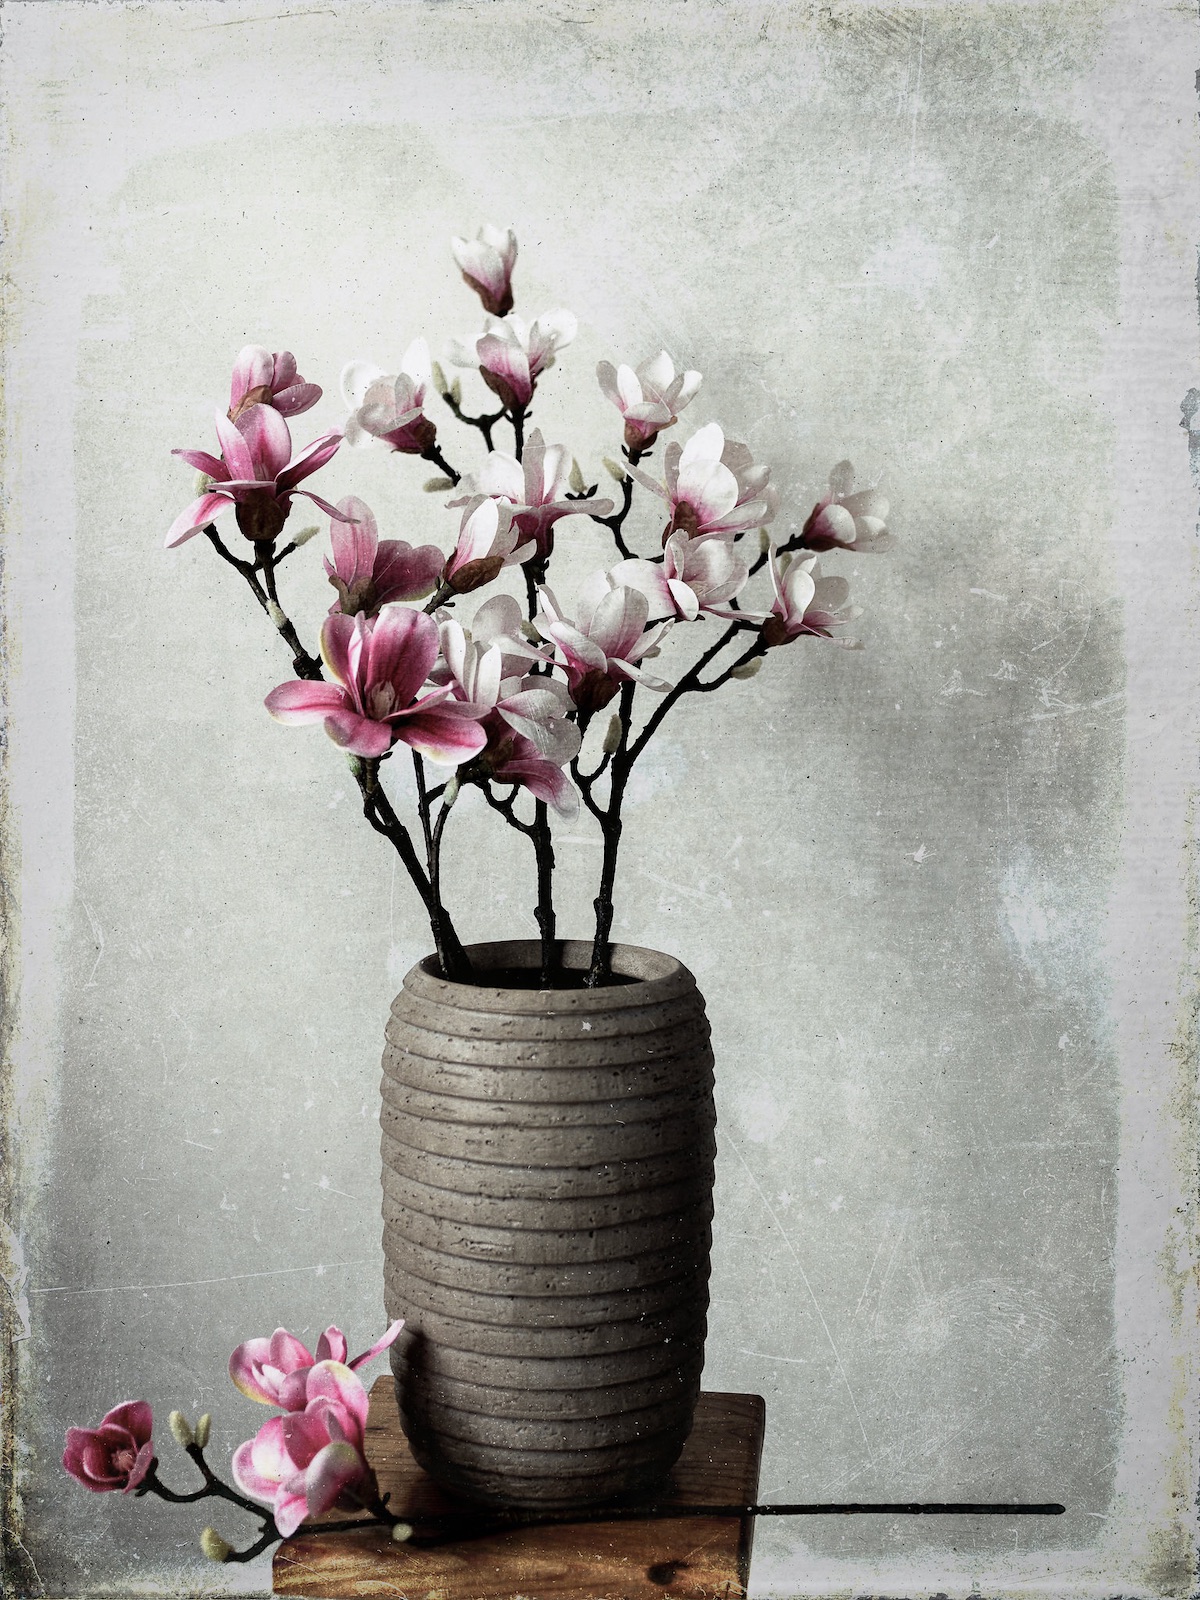 Wetplate Magnolia - - Medium Format Photograph by Martin Nienberg